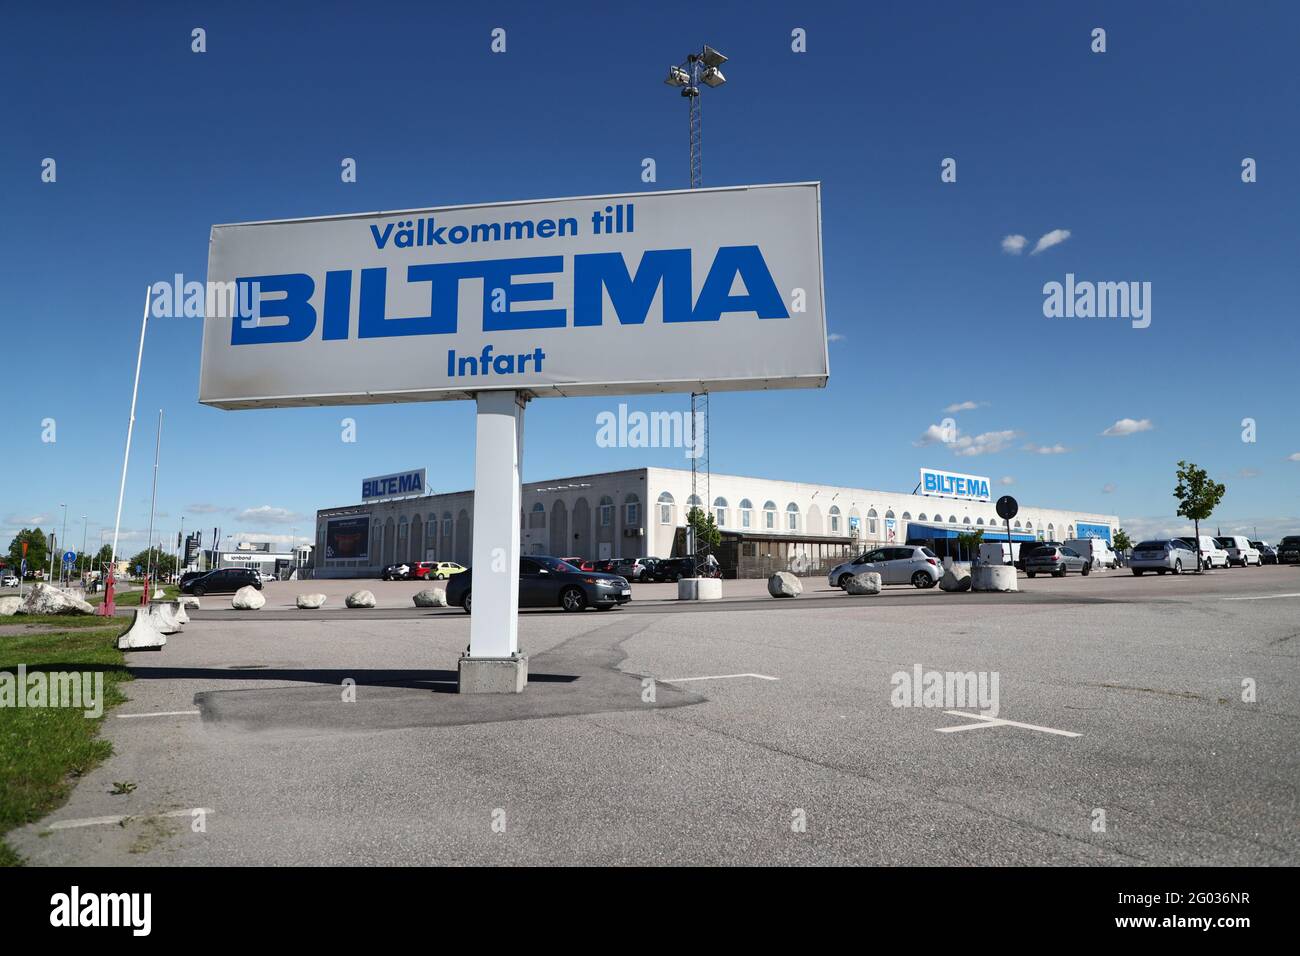 Biltema symbol hi-res stock photography and images - Alamy